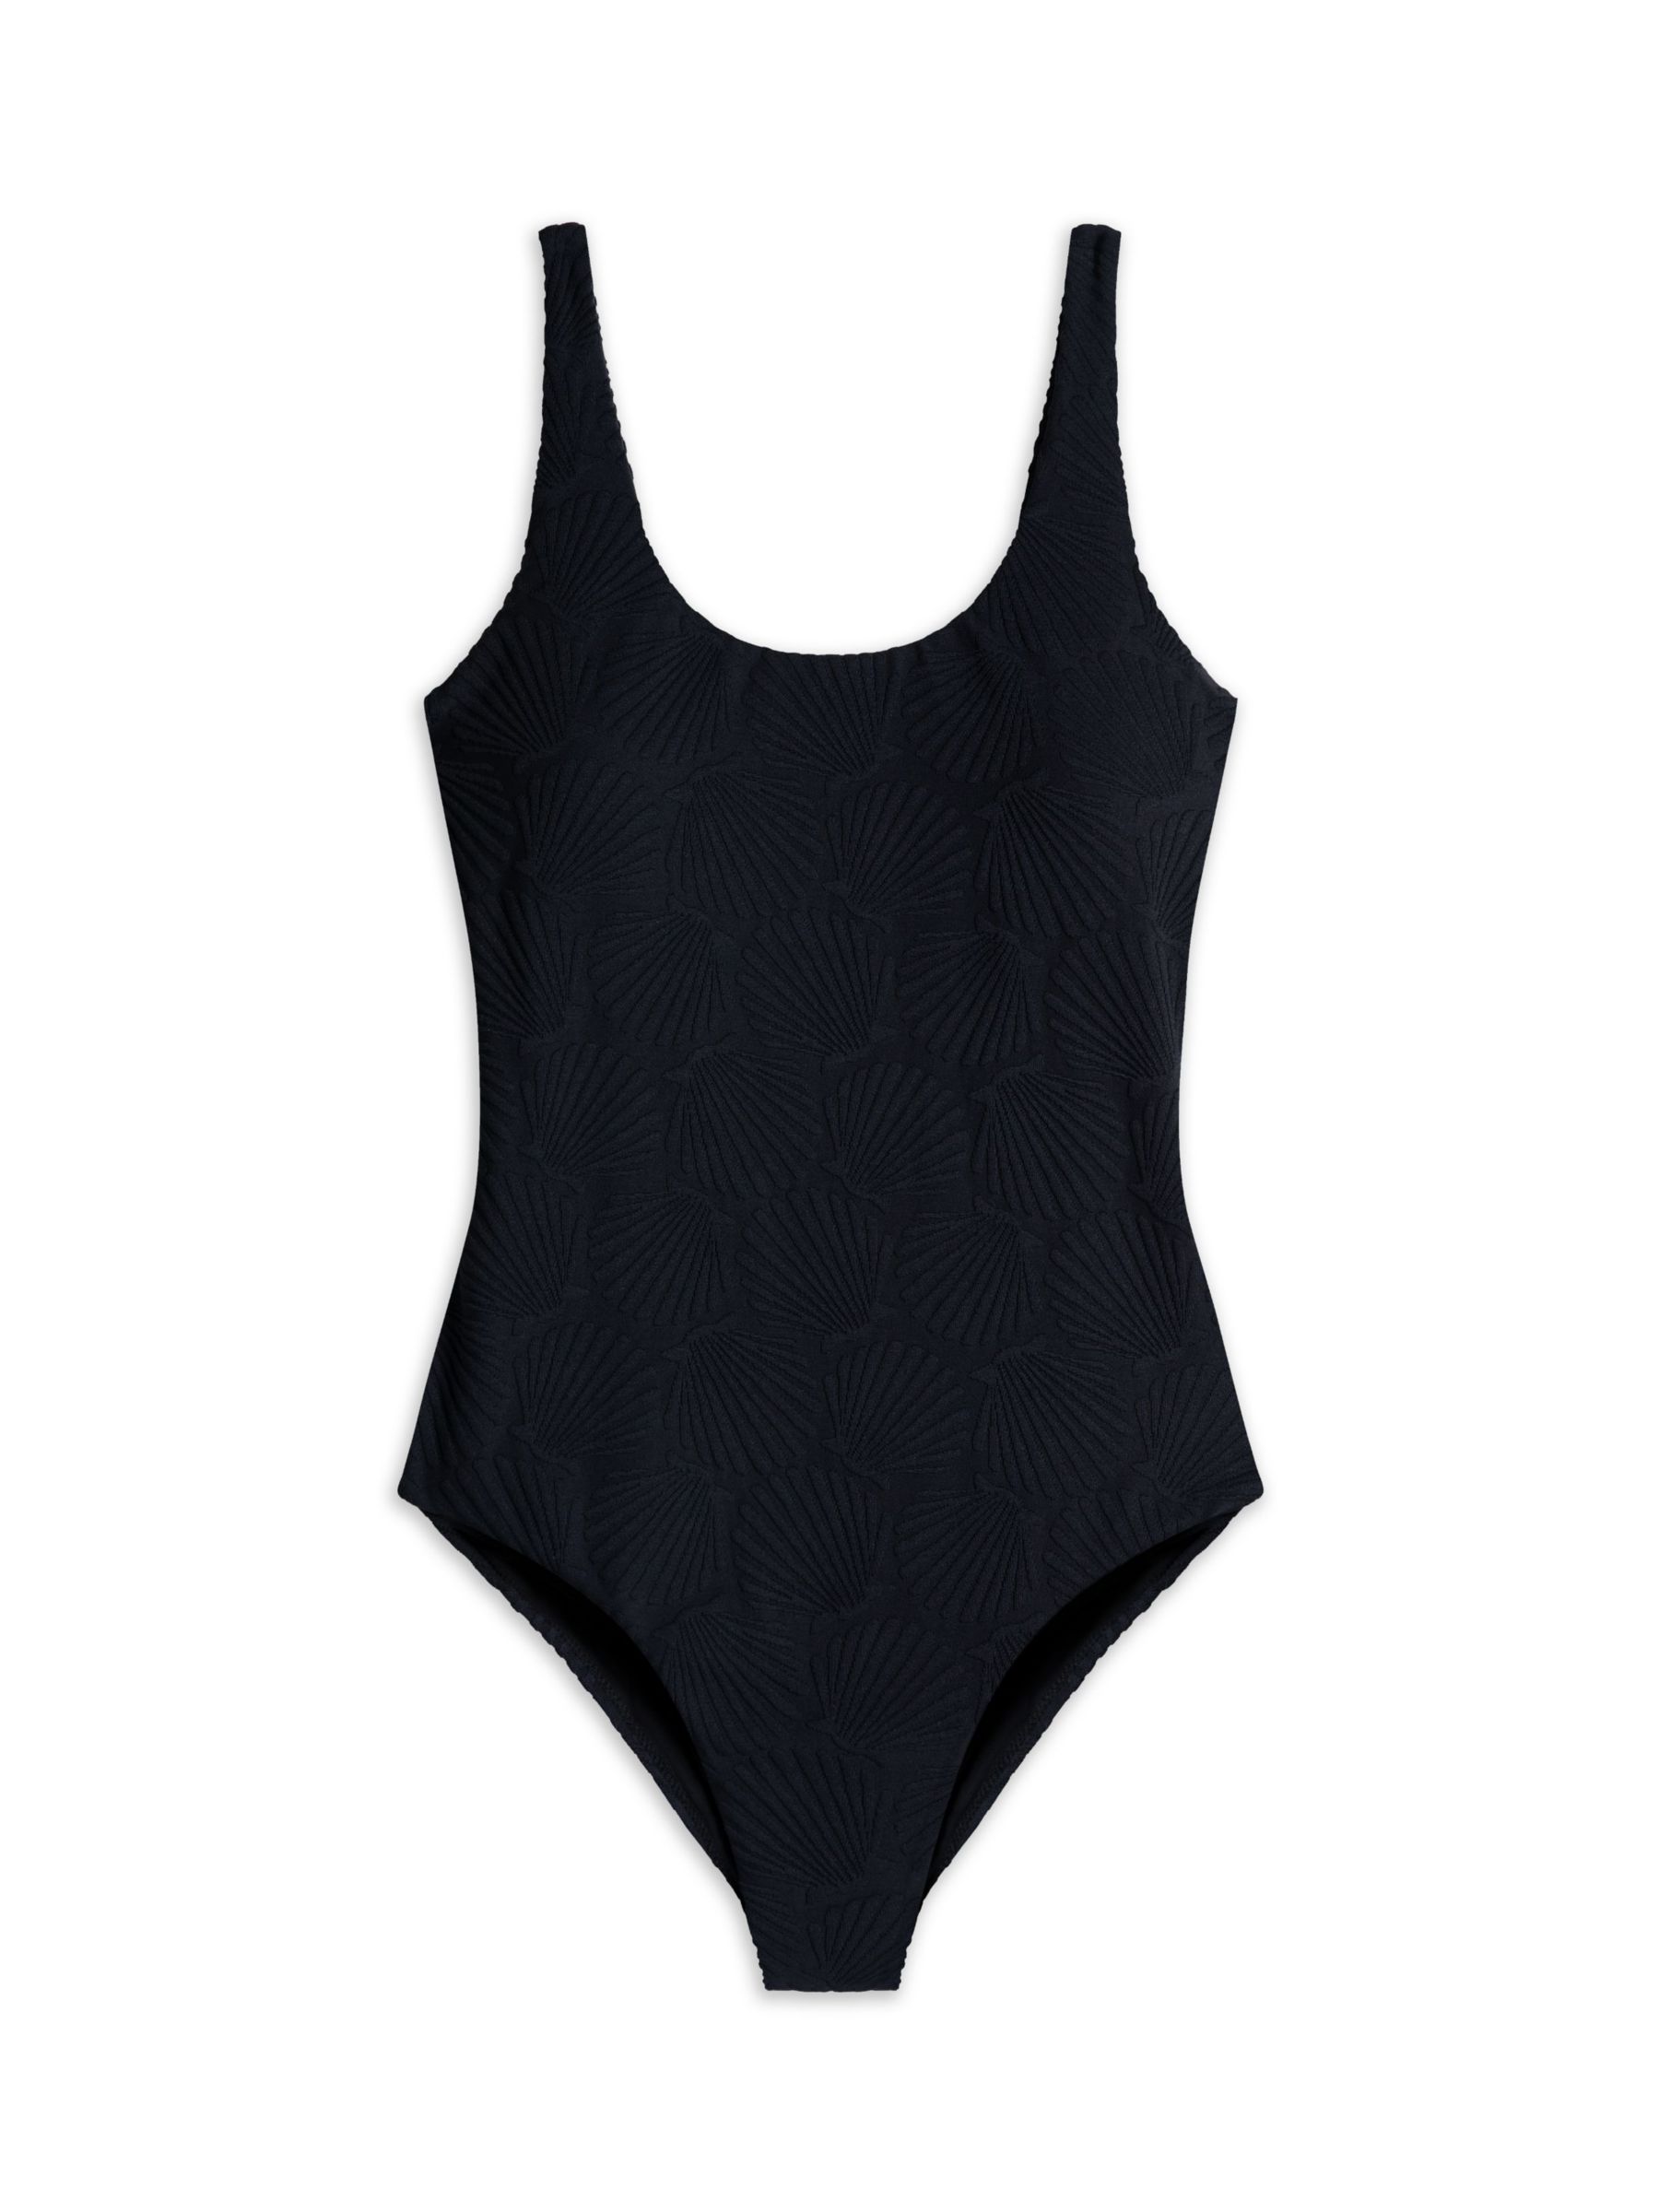 Chelsea Peers Jacquard Shell Swimsuit, Black, 6